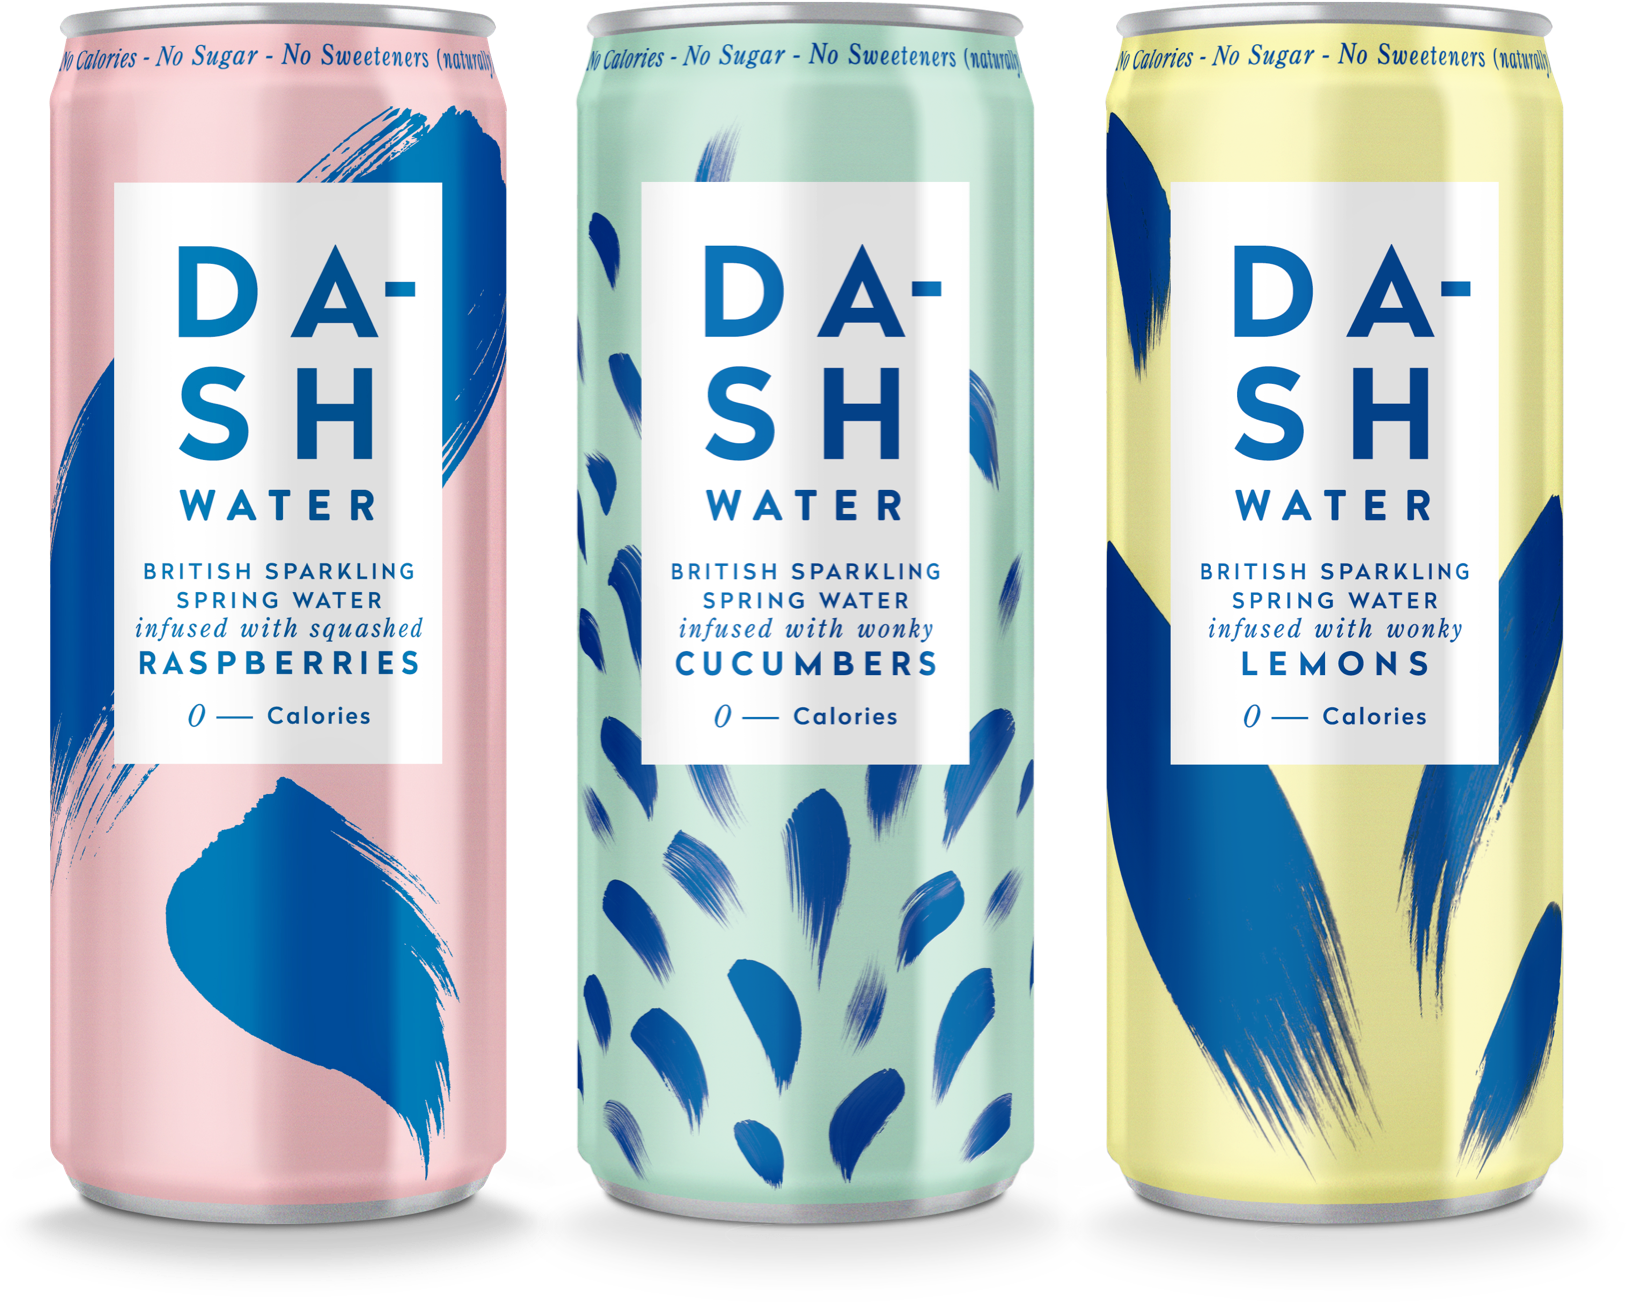 DA-SH Water Is The Perfect Summer Beverage  Dieline - Design, Branding &  Packaging Inspiration